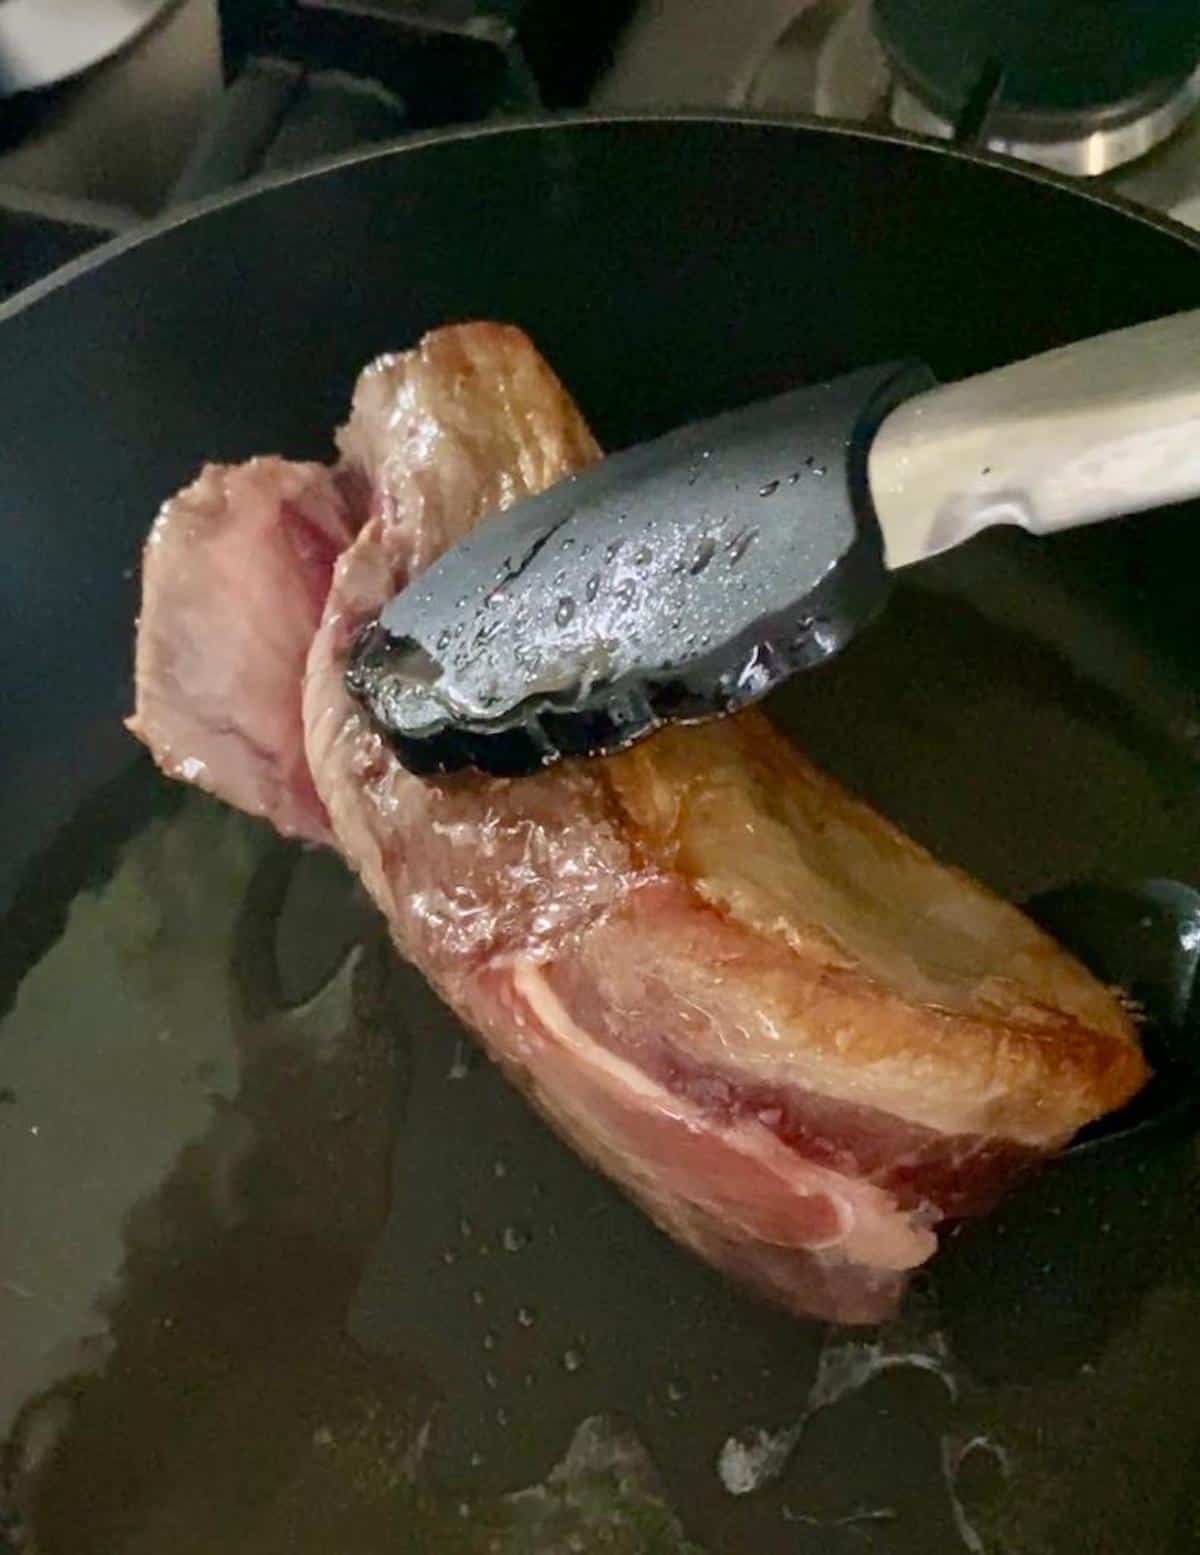 Searing lamb rump in a frying pan